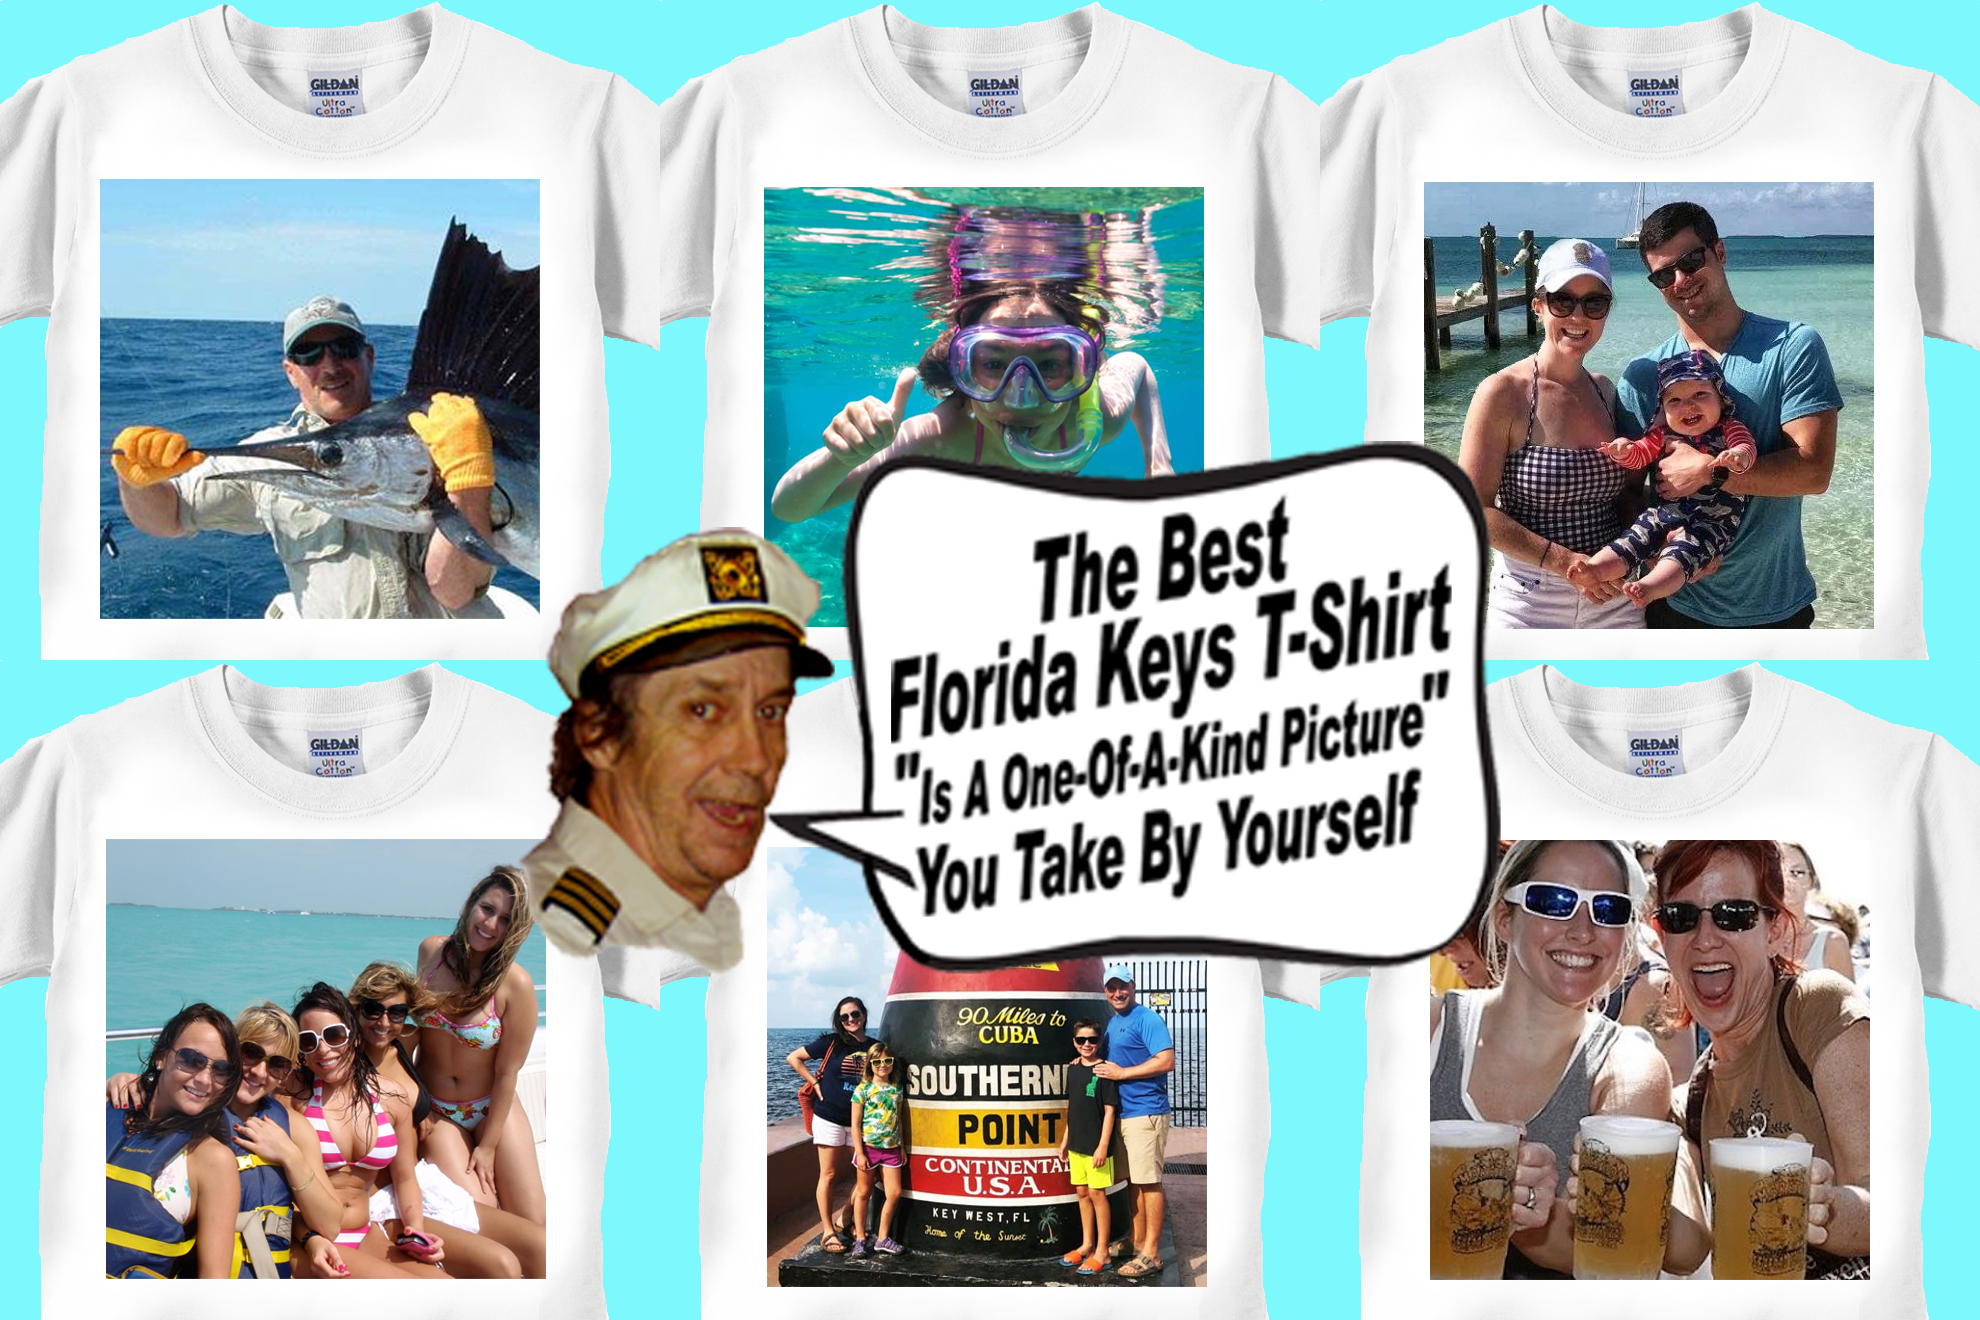 Upload Any Florida Keys Photo On A T-Shirt